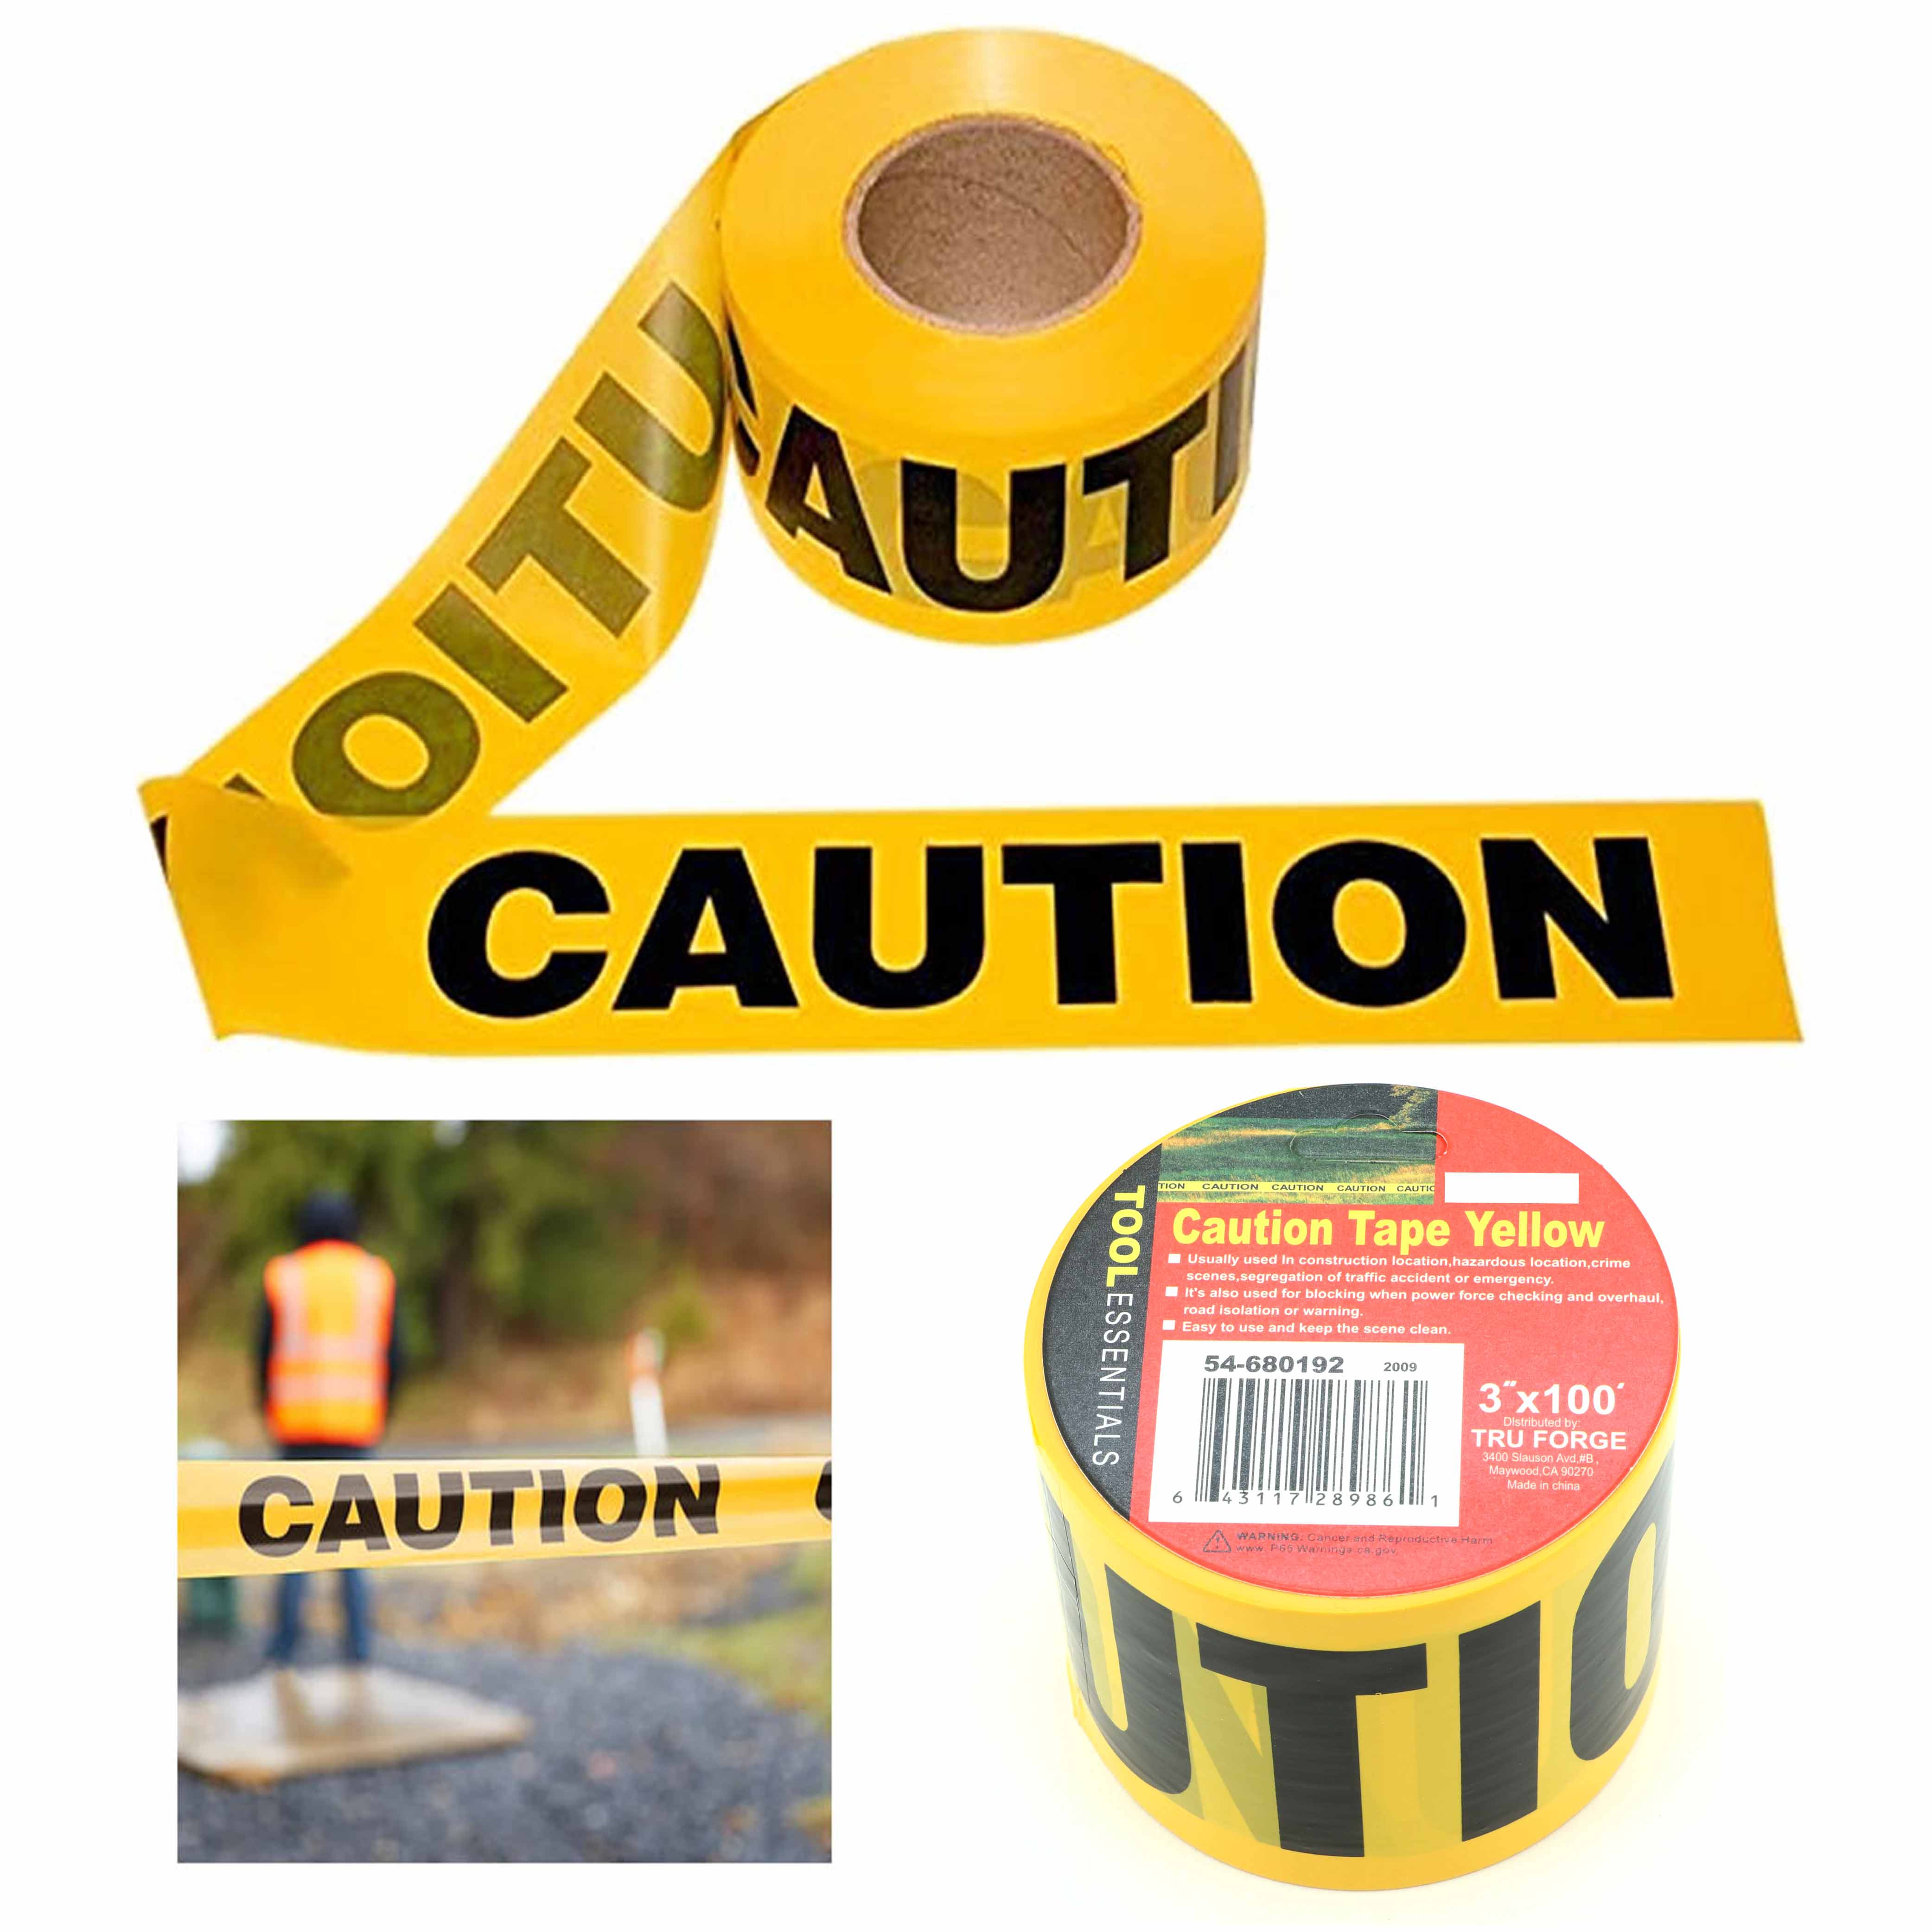 3 x 100ft Caution Tape Roll Yellow Barricade Hazard Weatherproof Safety Warning 28986